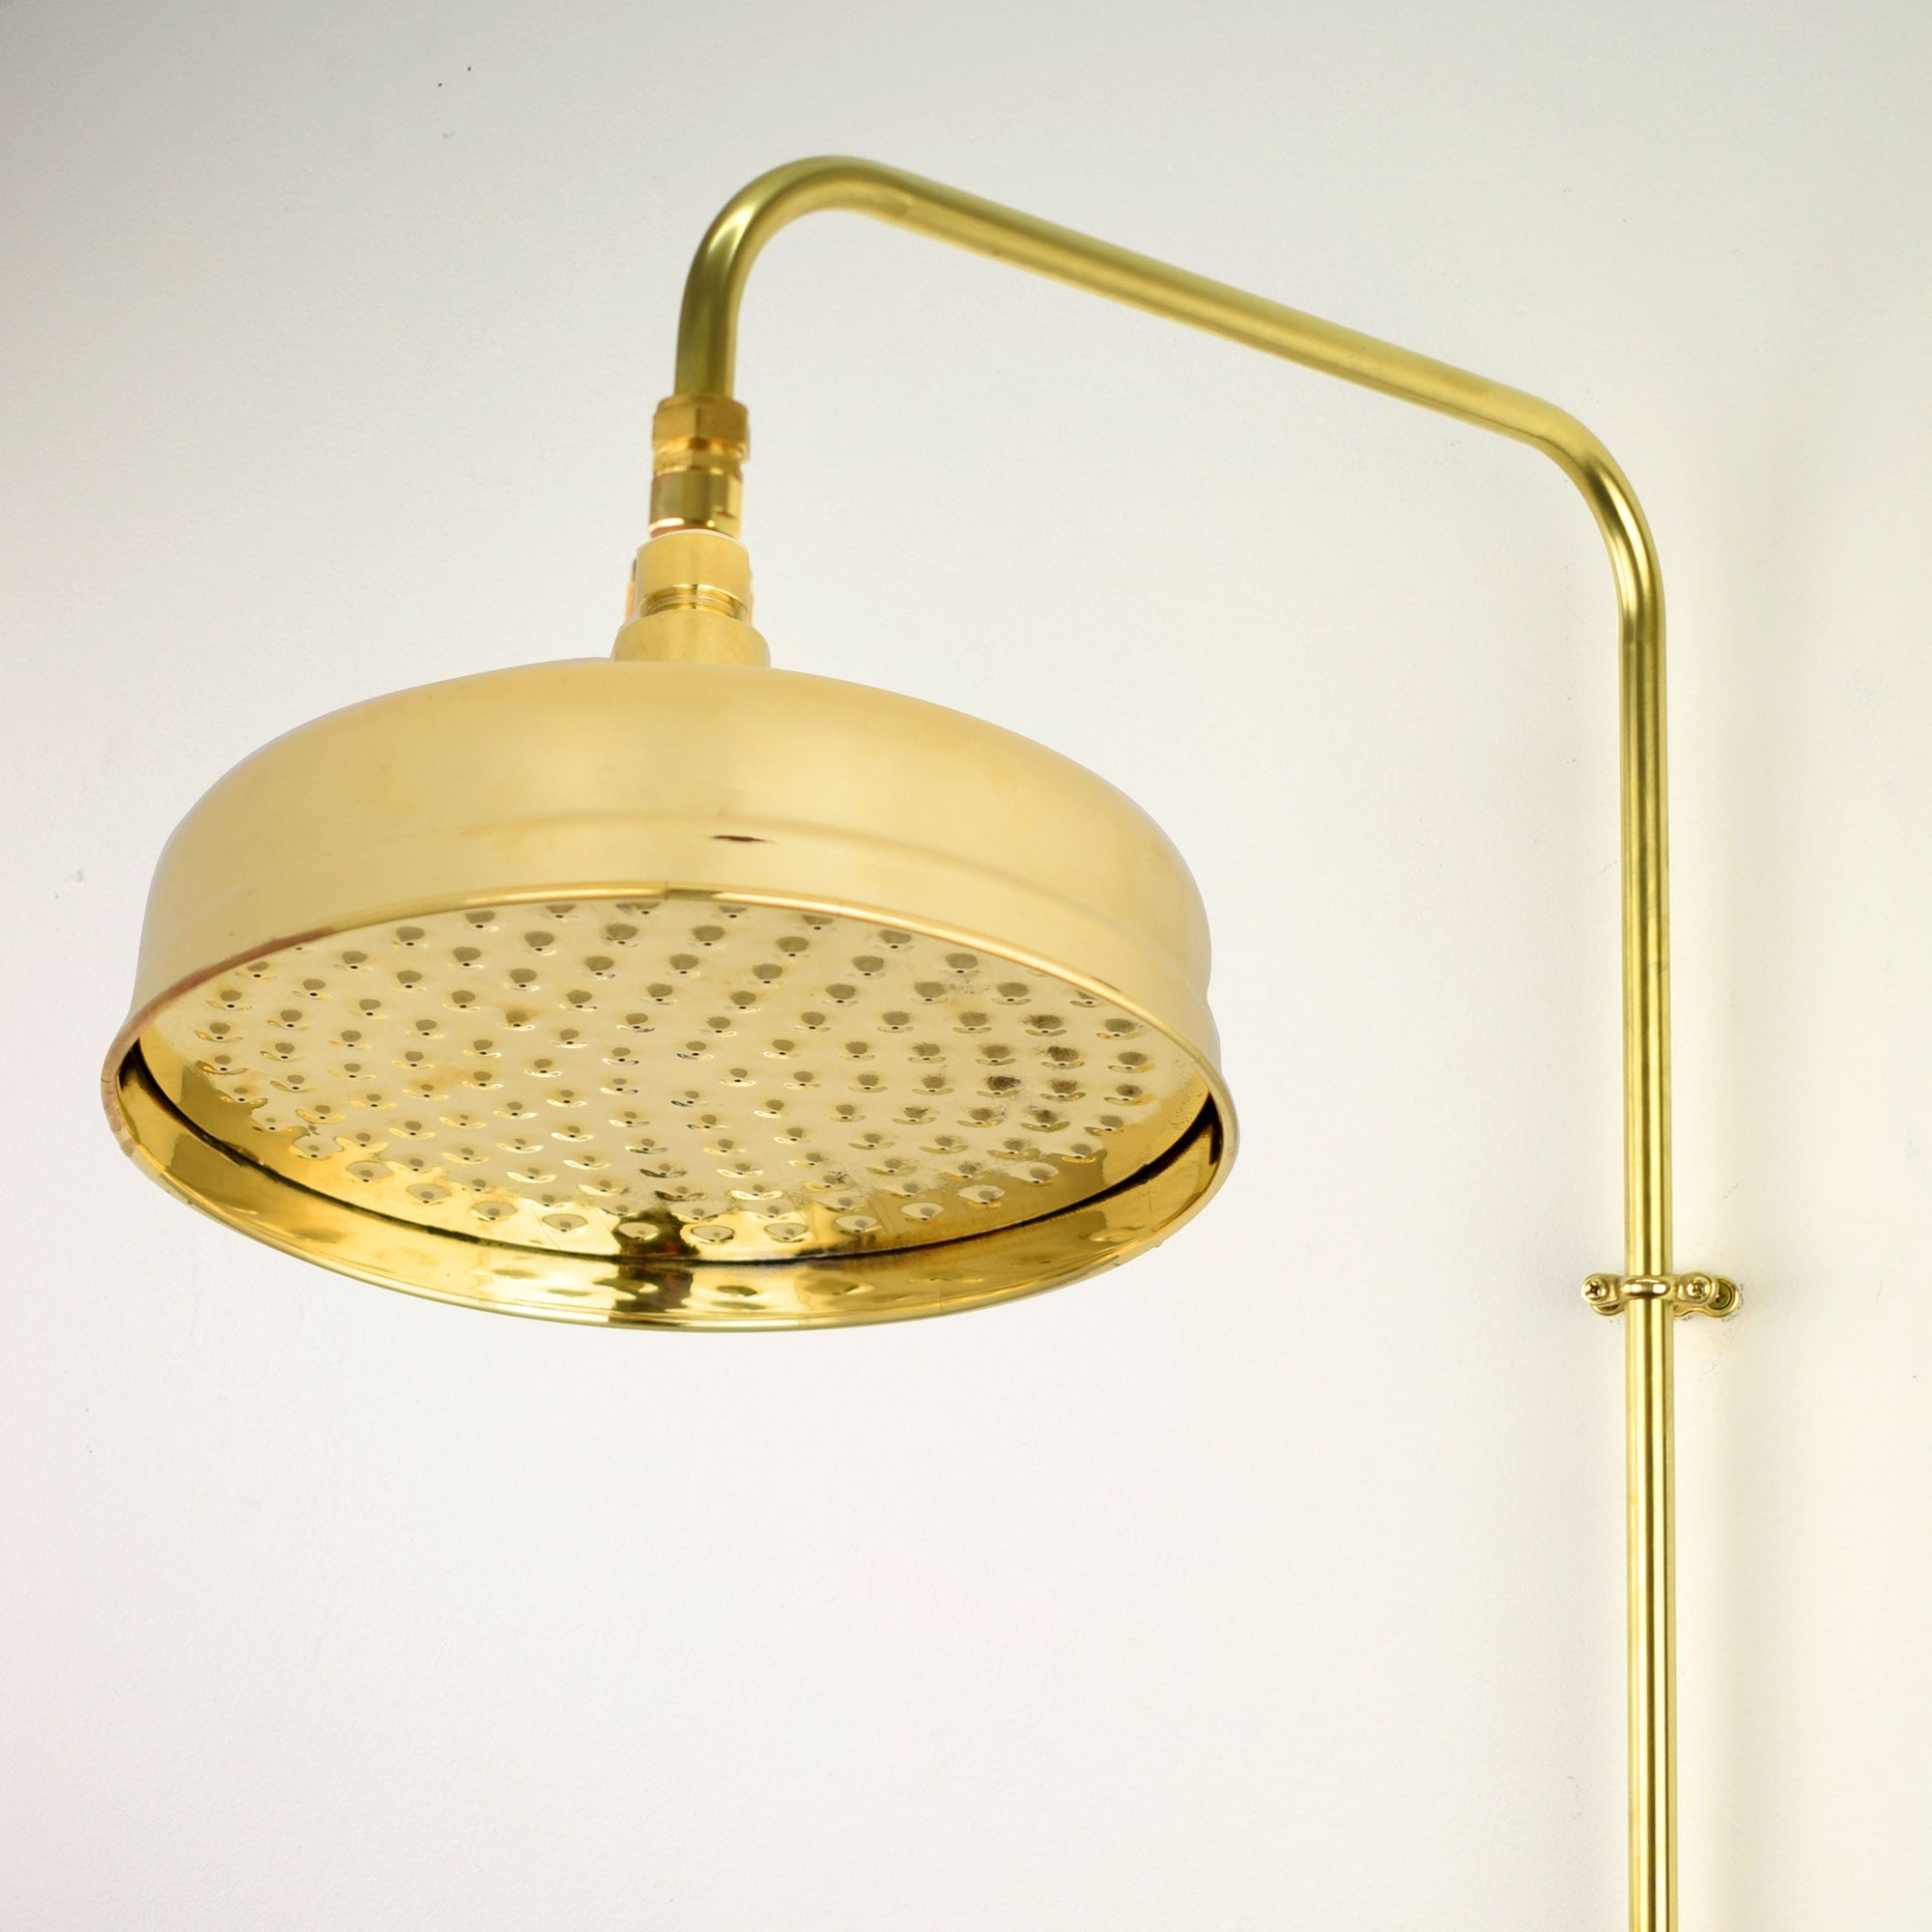 A luxurious brass shower head with a sleek and modern design, featuring a waterfall spray pattern.